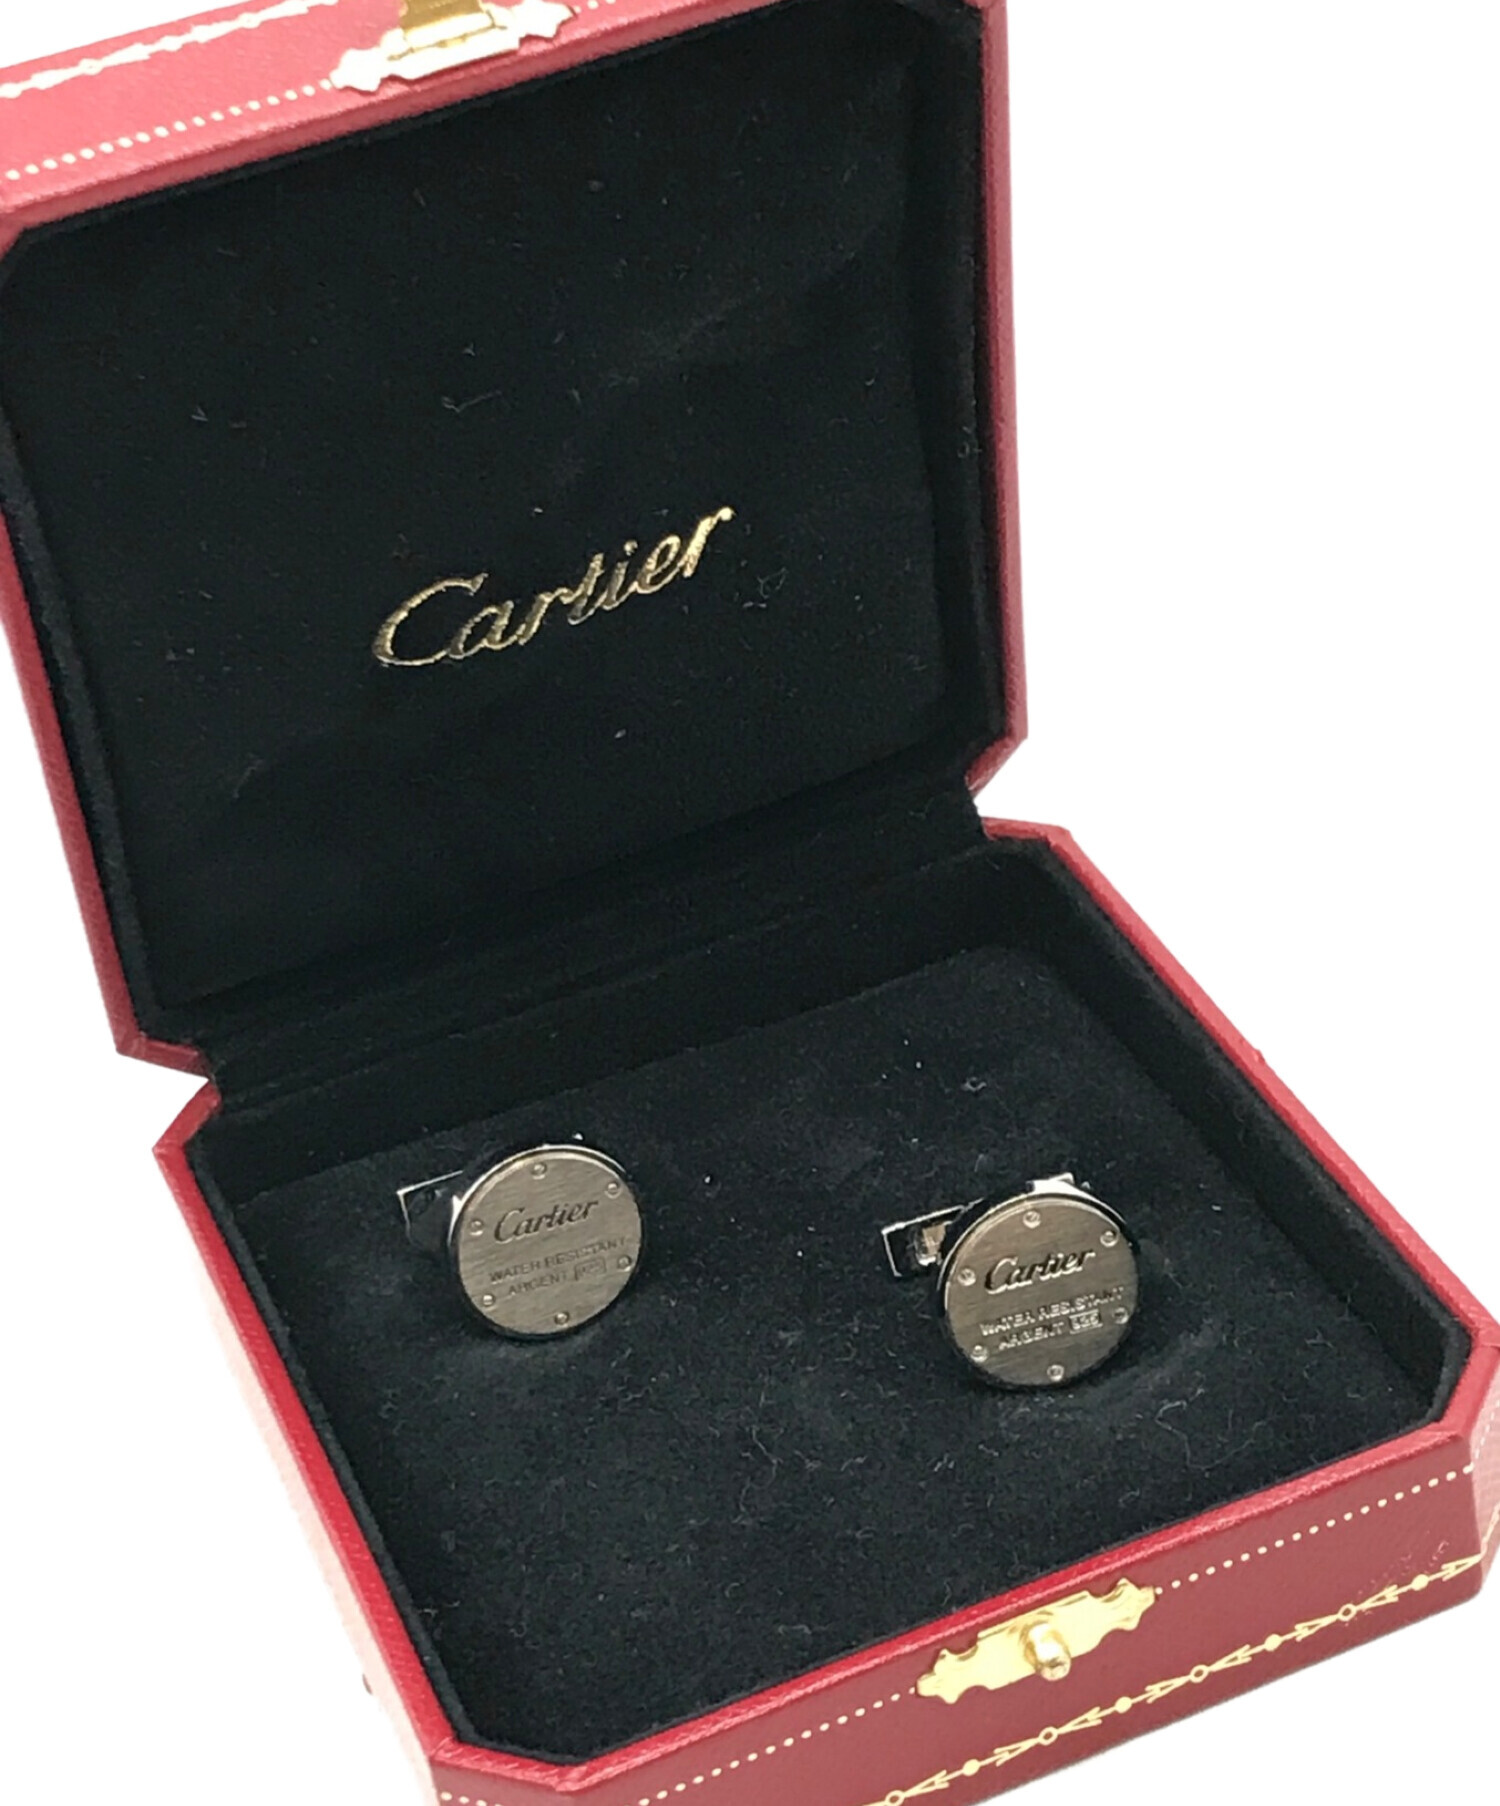 Cartier (カルティエ) WATER RESISTANT DECOR CUFFLINKSウォーター レジスタント デコール カフリンクス